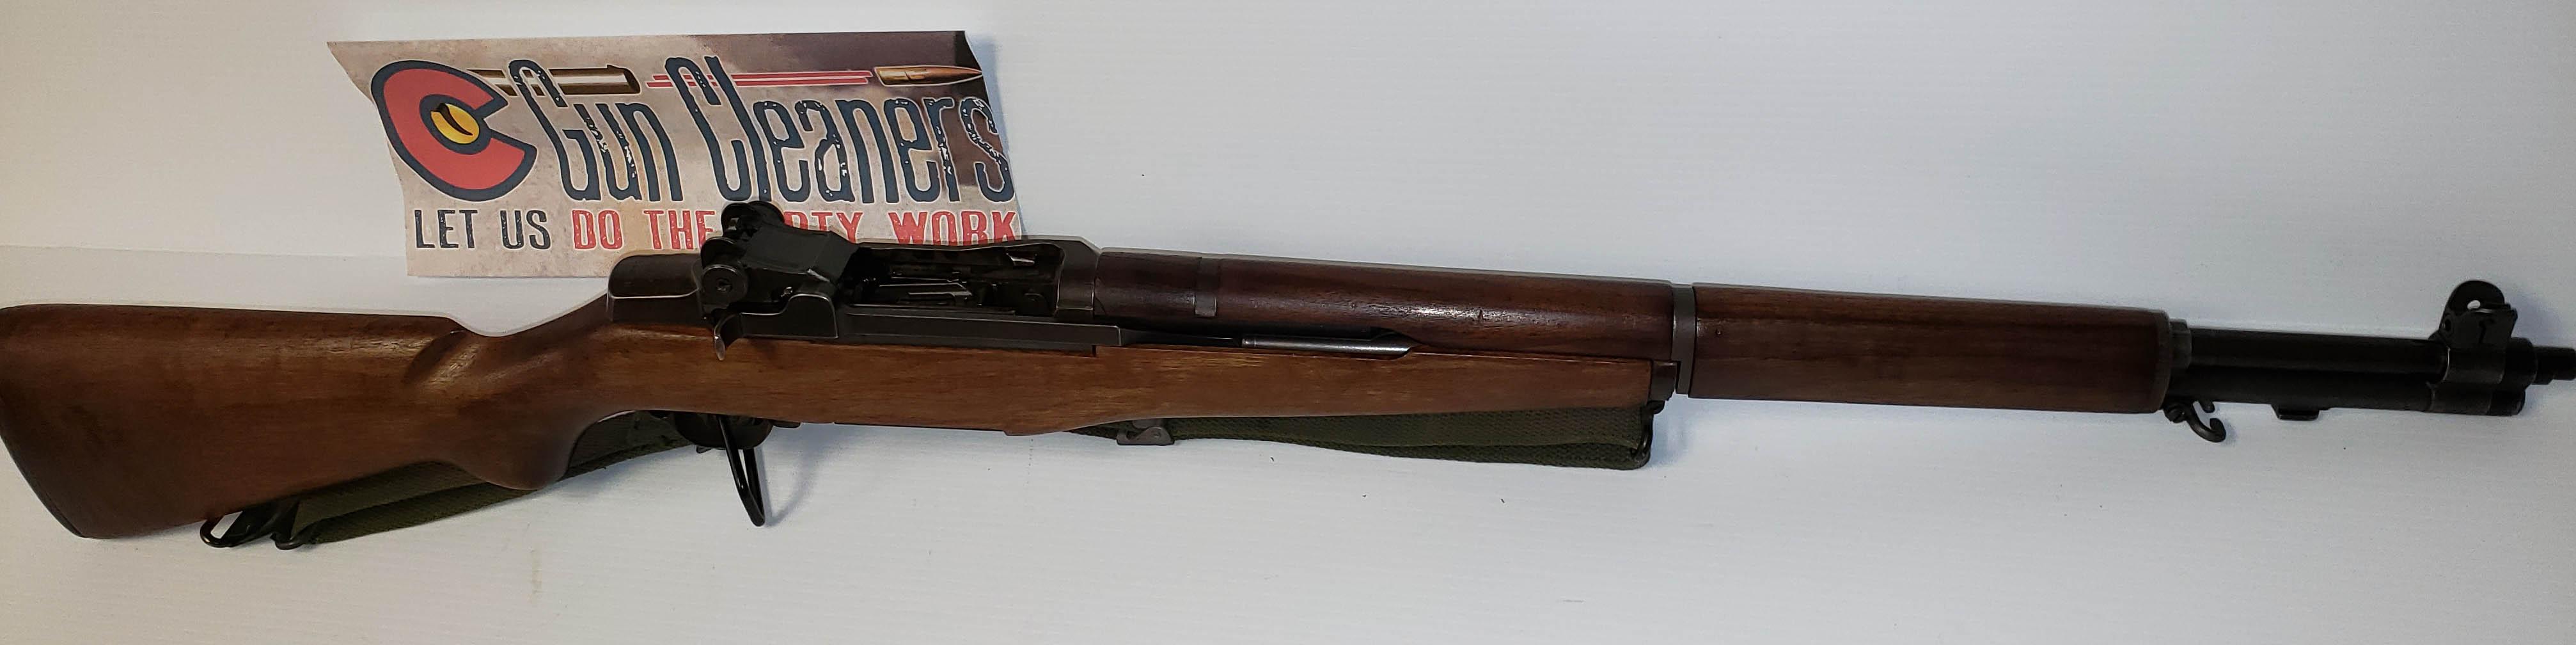 WWII standard-issue battle rifle: the U.S. Springfield Armory M1 Garand